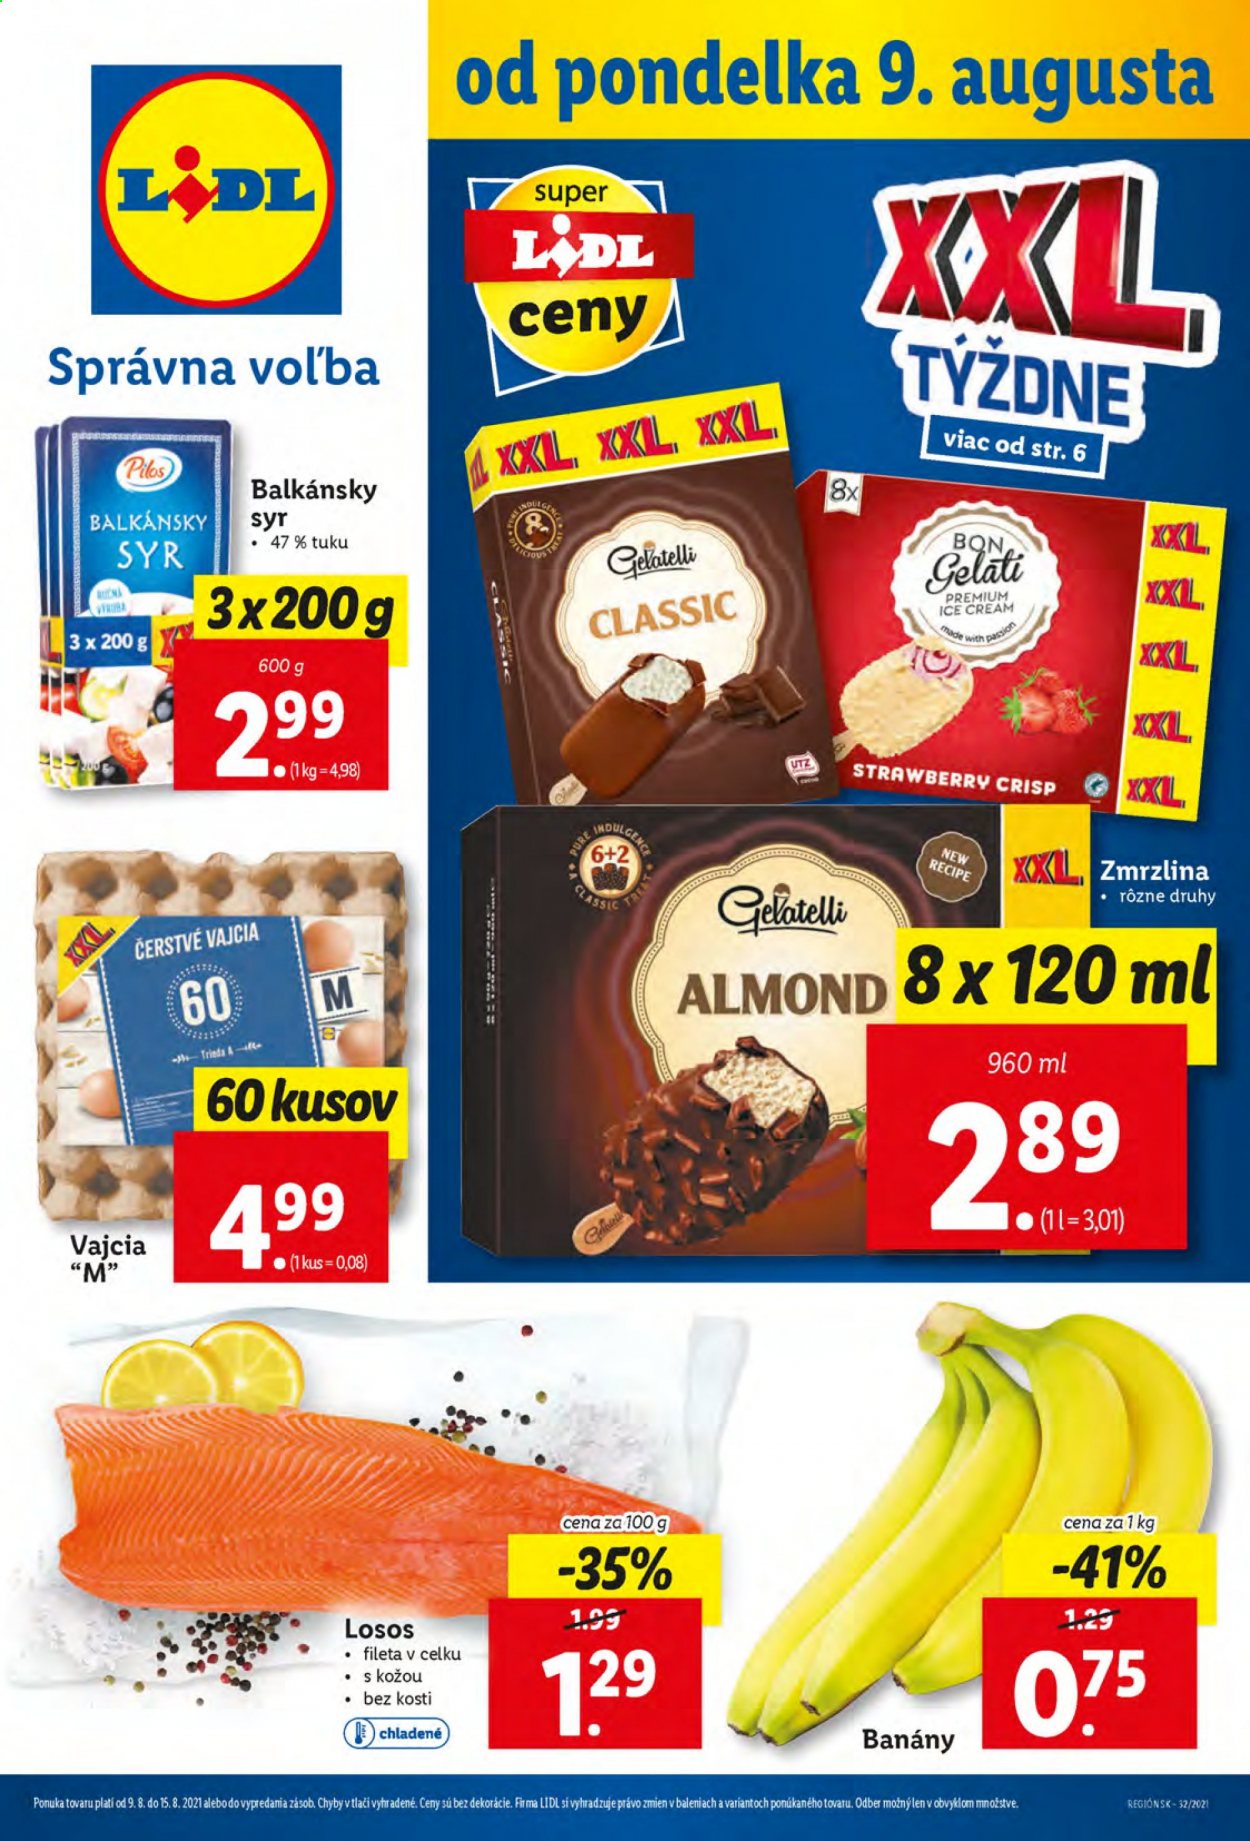 thumbnail - Leták Lidl - 9.8.2021 - 15.8.2021 - Produkty v akcii - banány, losos, Pilos, syr, balkánsky syr, vajcia, zmrzlina. Strana 1.